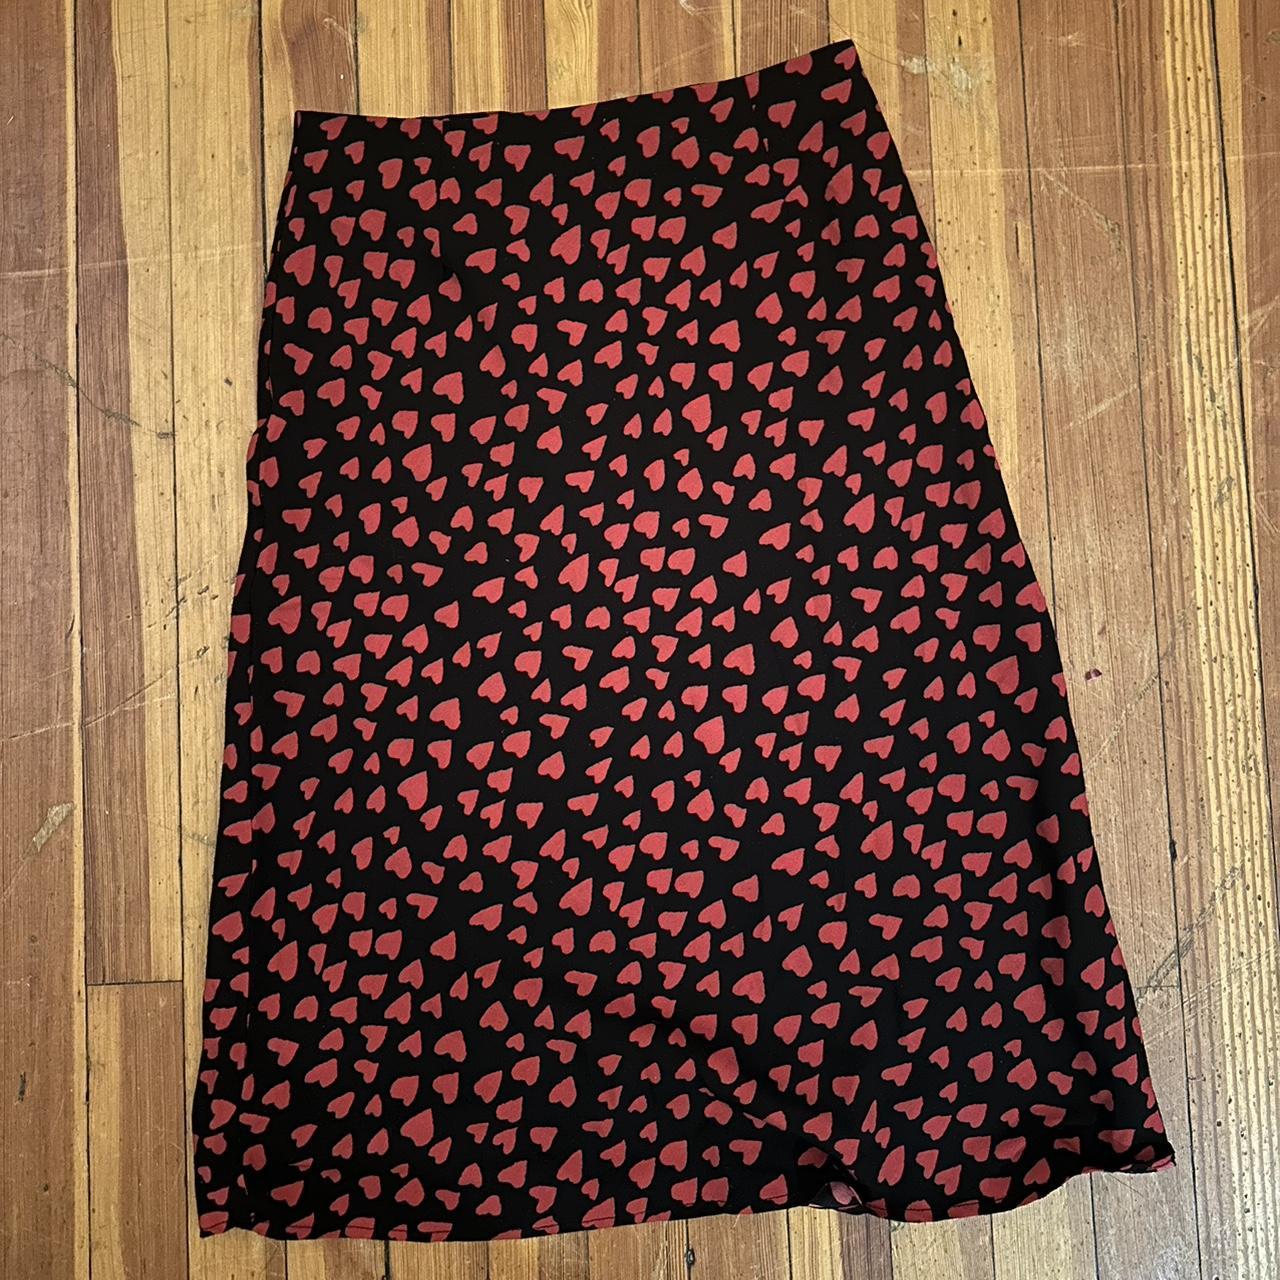 Nasty Gal Women's Black and Red Skirt